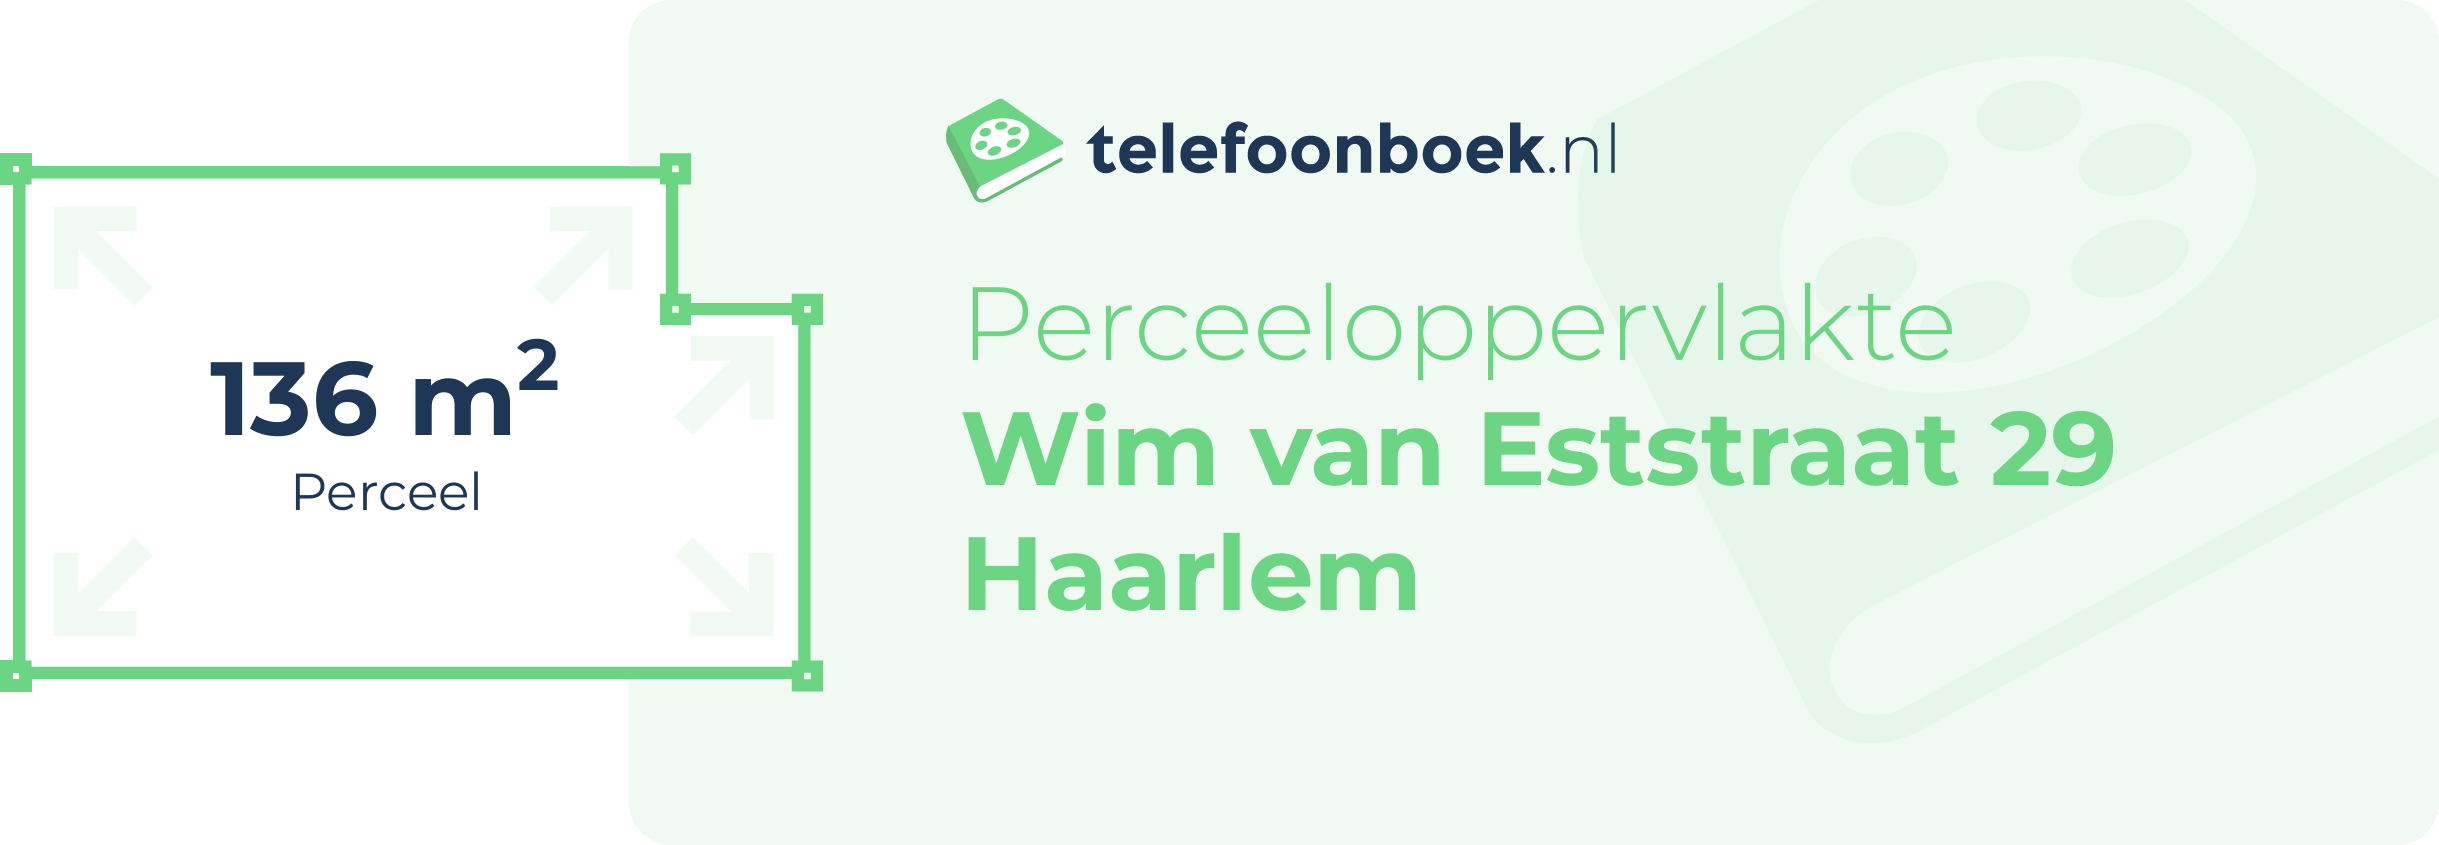 Perceeloppervlakte Wim Van Eststraat 29 Haarlem